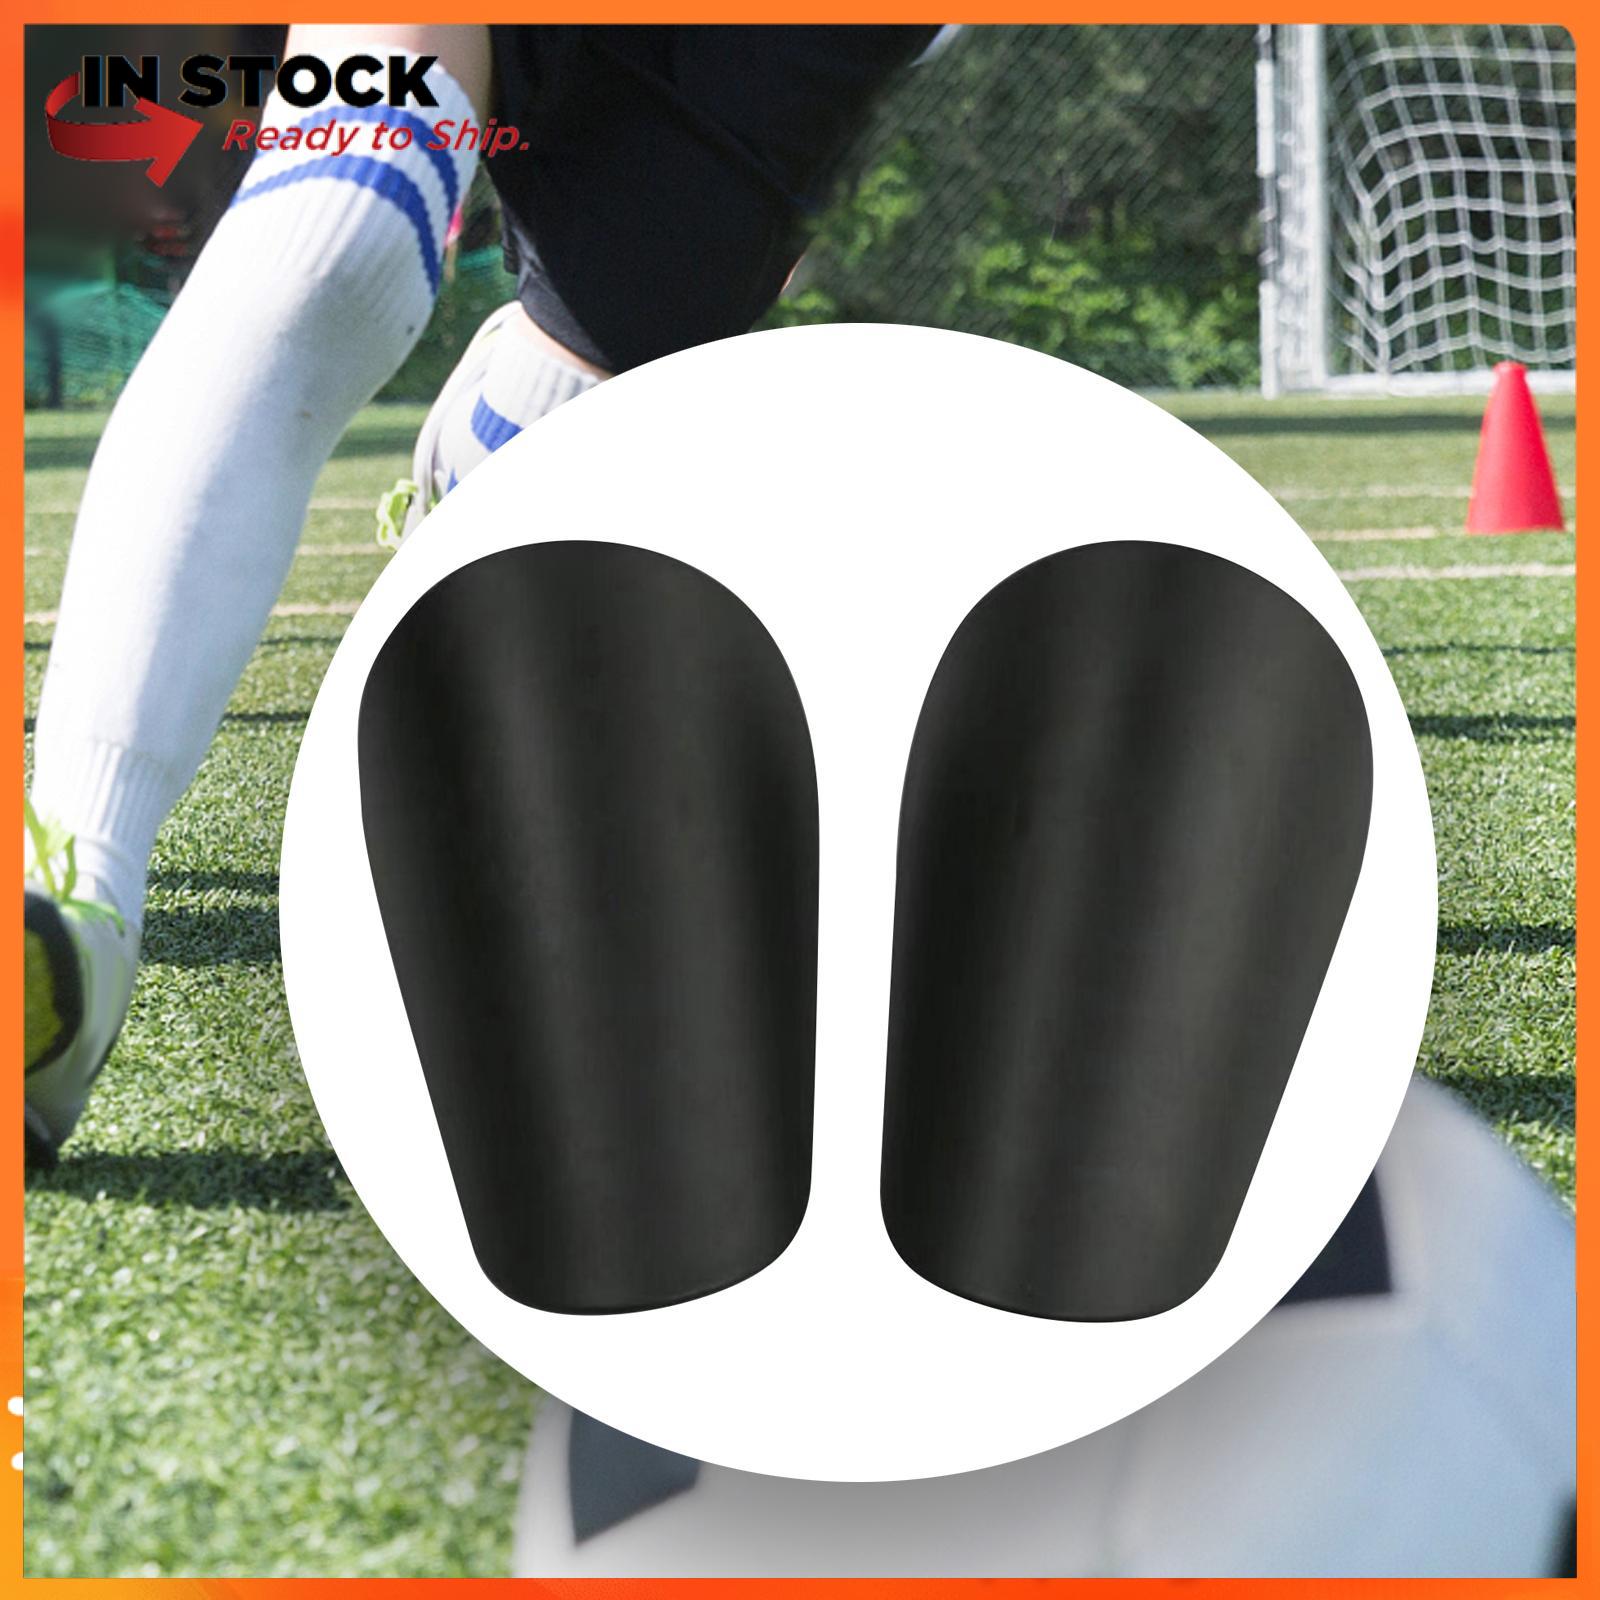 Ulight 1 Pair Mini Soccer Shin Guards Lightweight Comfortable Shin Pads